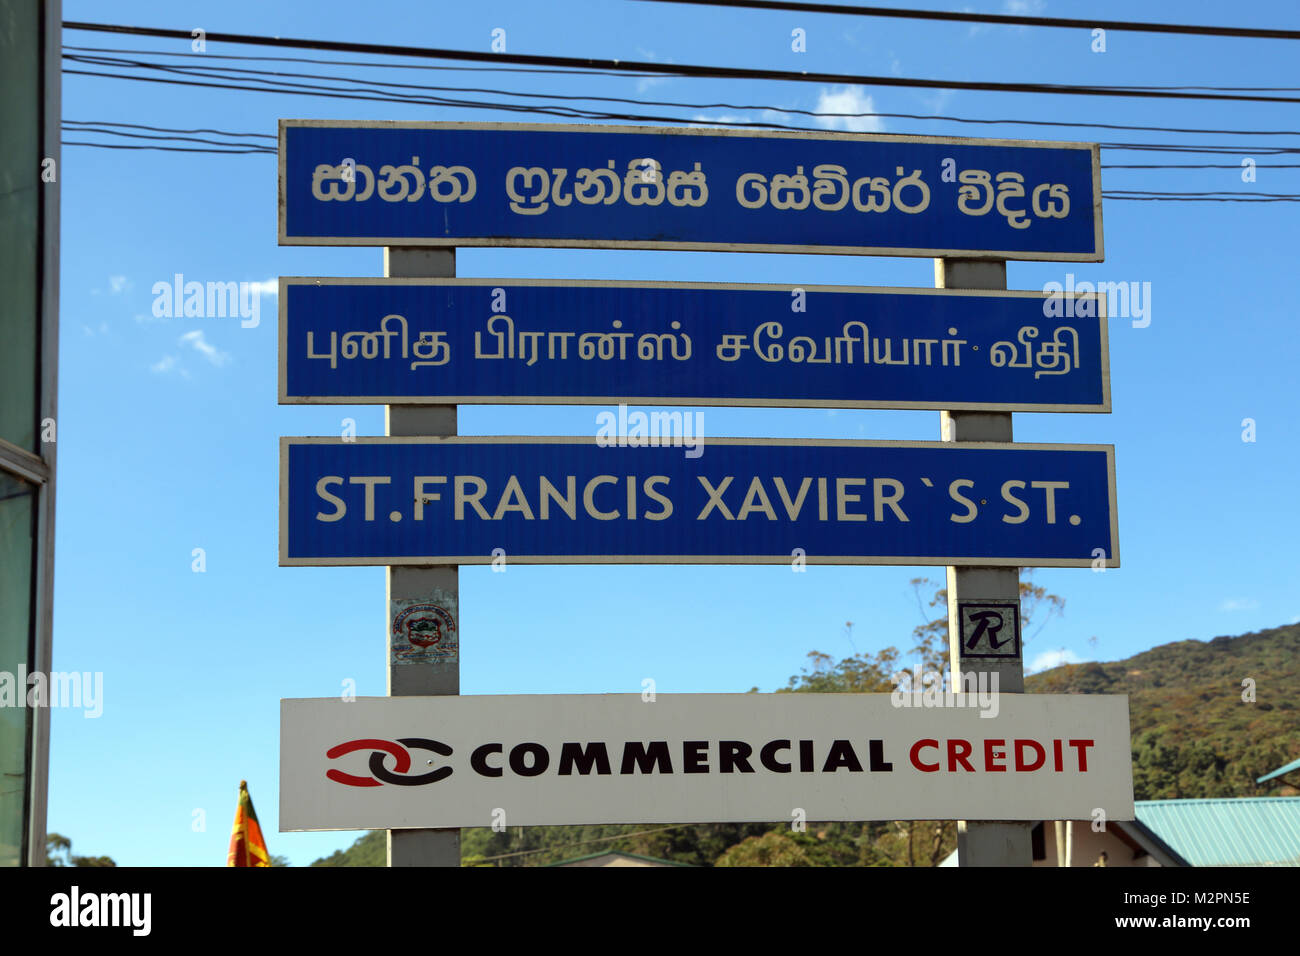 St Francis Xavier's Street Nuwara Eliya Hill Country Central Province Sri Lanka Multi Lingual Signs Stock Photo